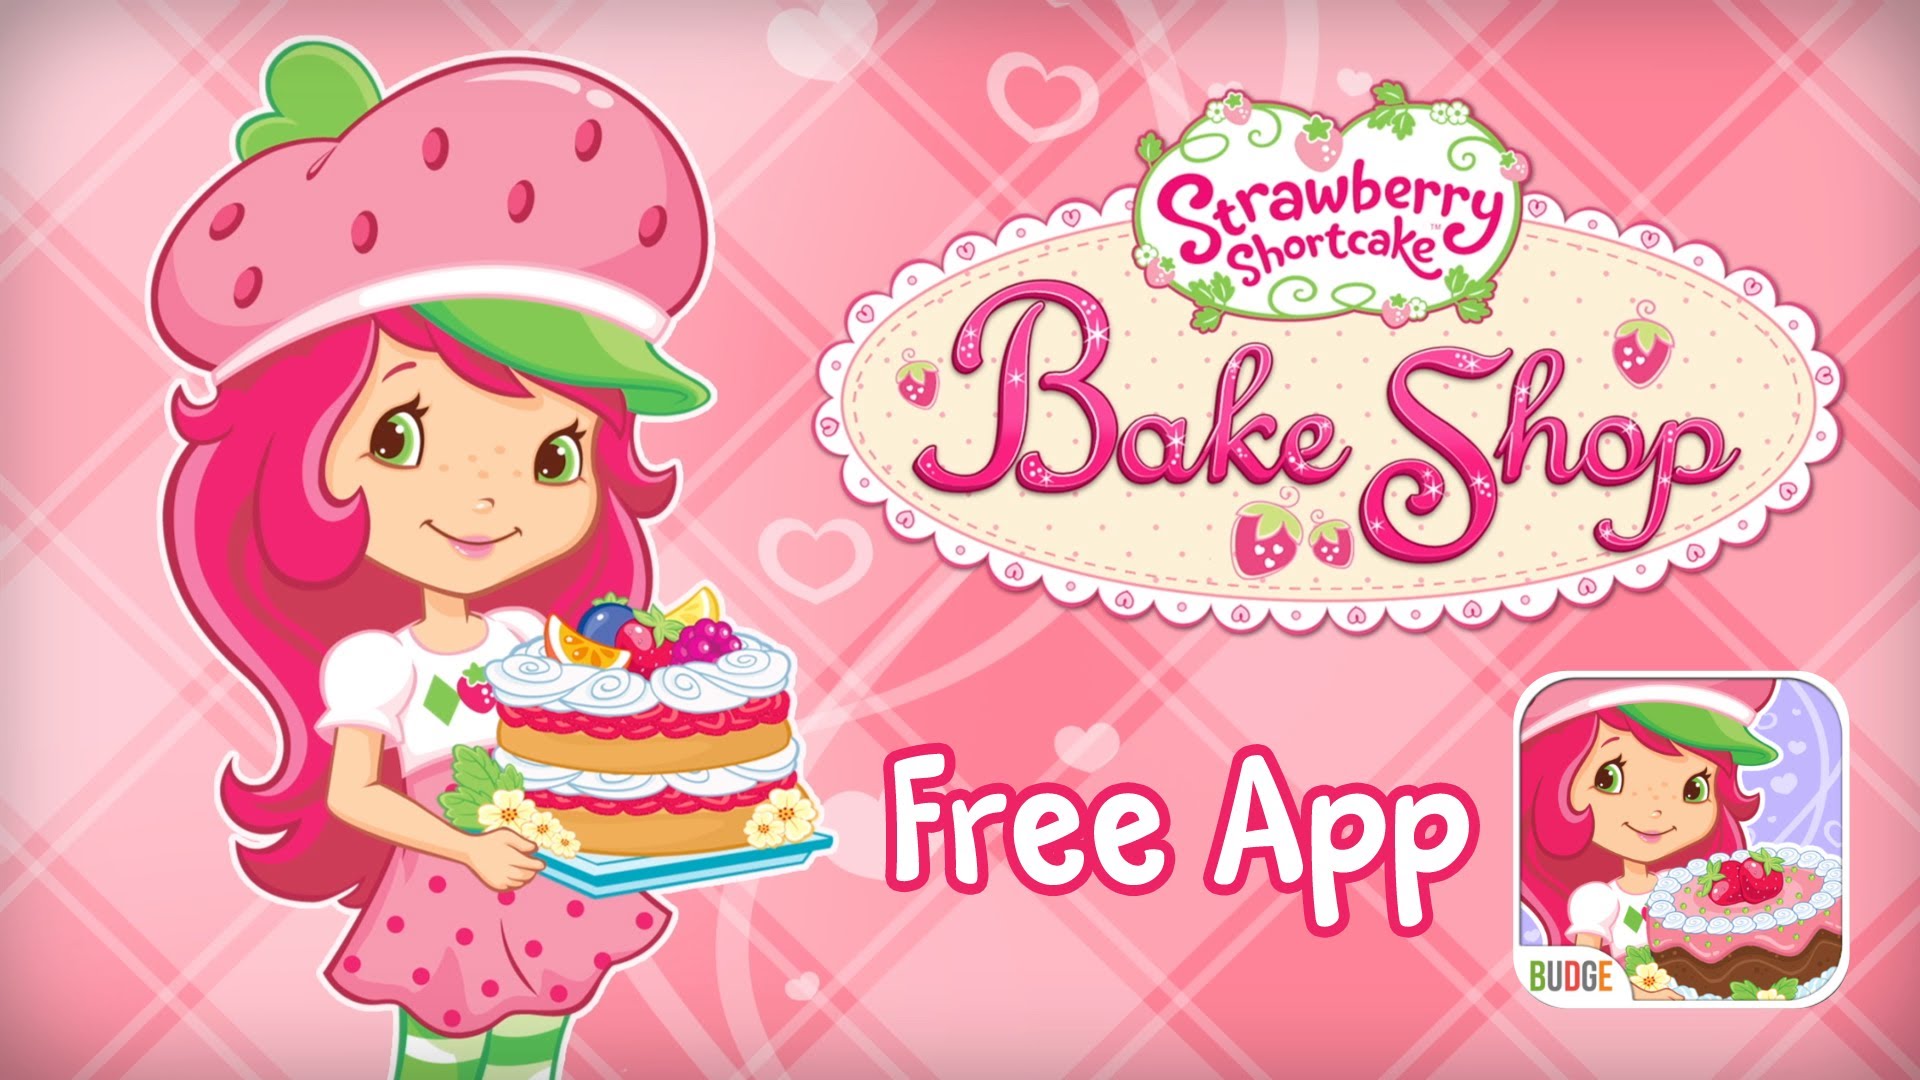 Strawberry Shortcake Bake Shop App - YouTube